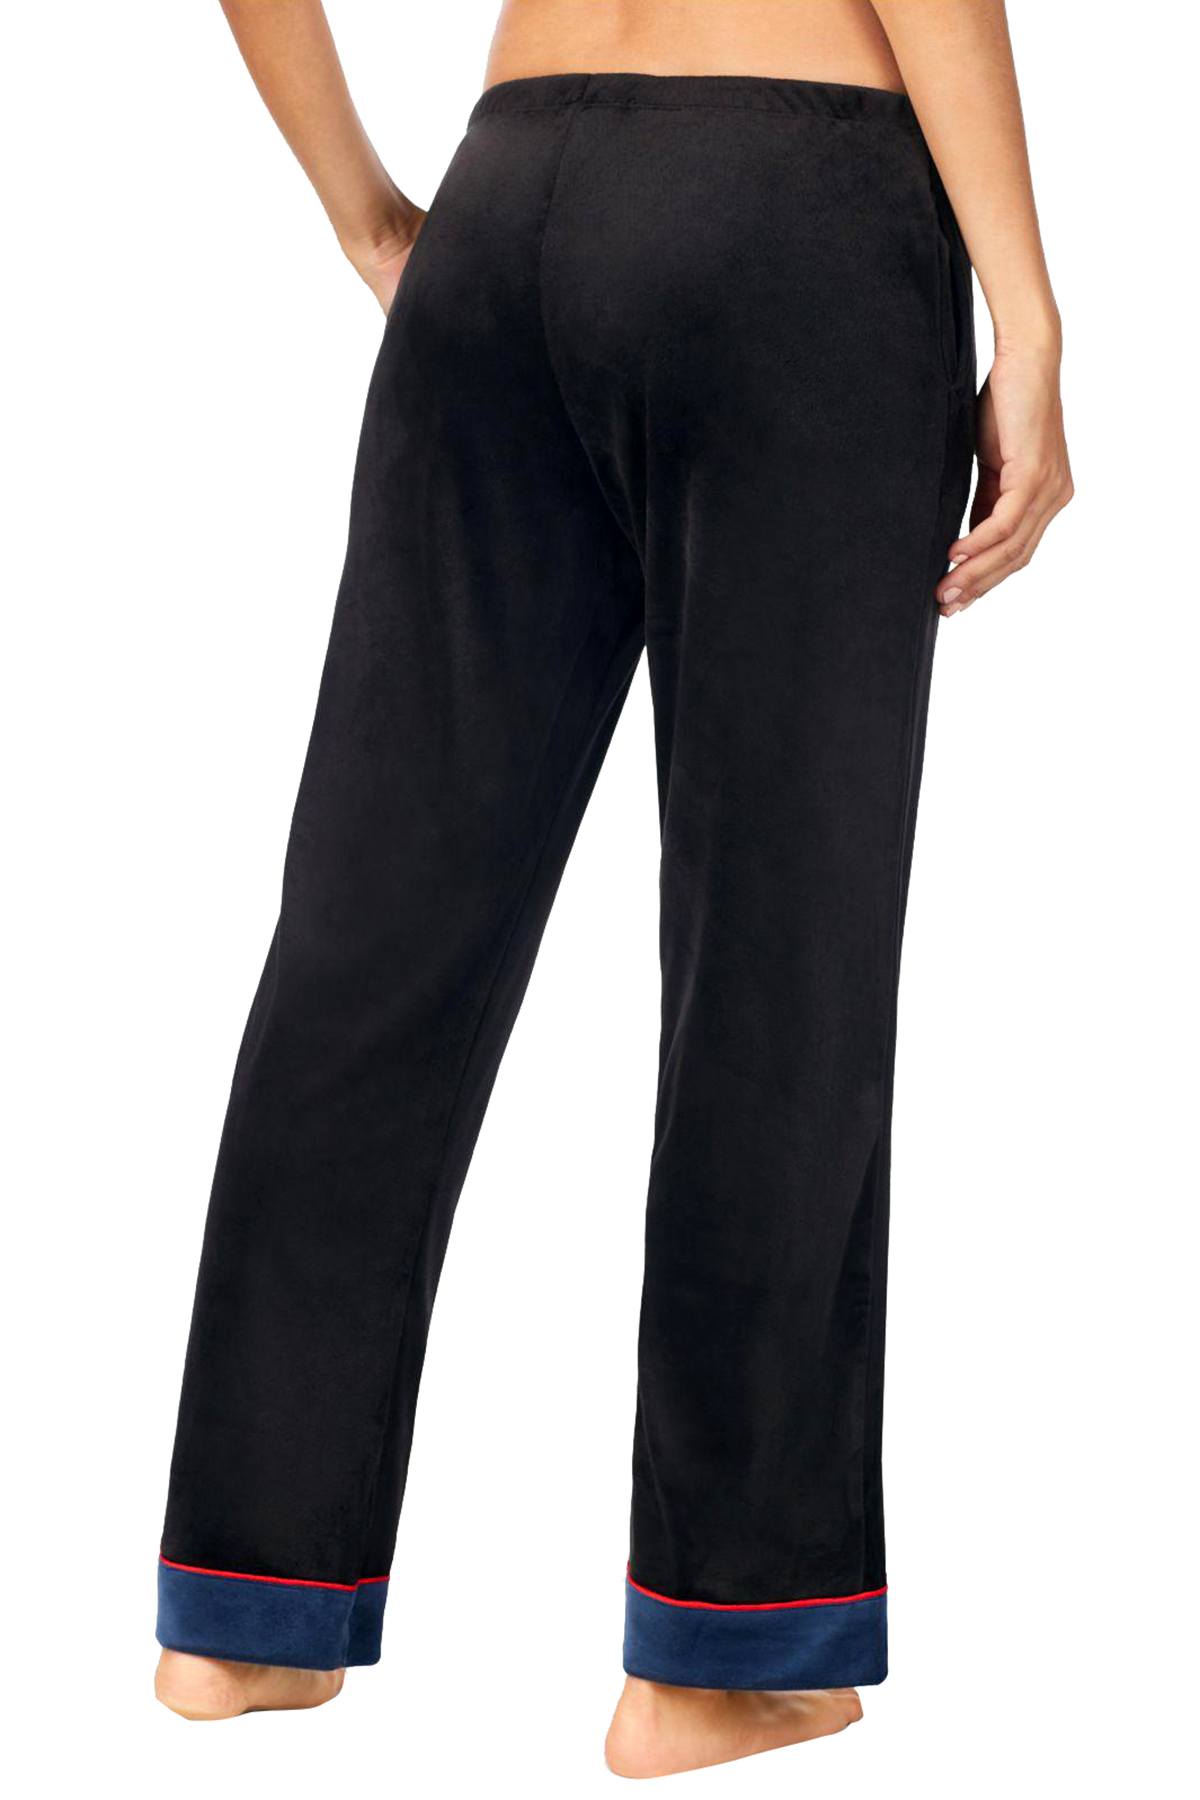 DKNY Black/Navy Velour Cuffed Pajama Pant